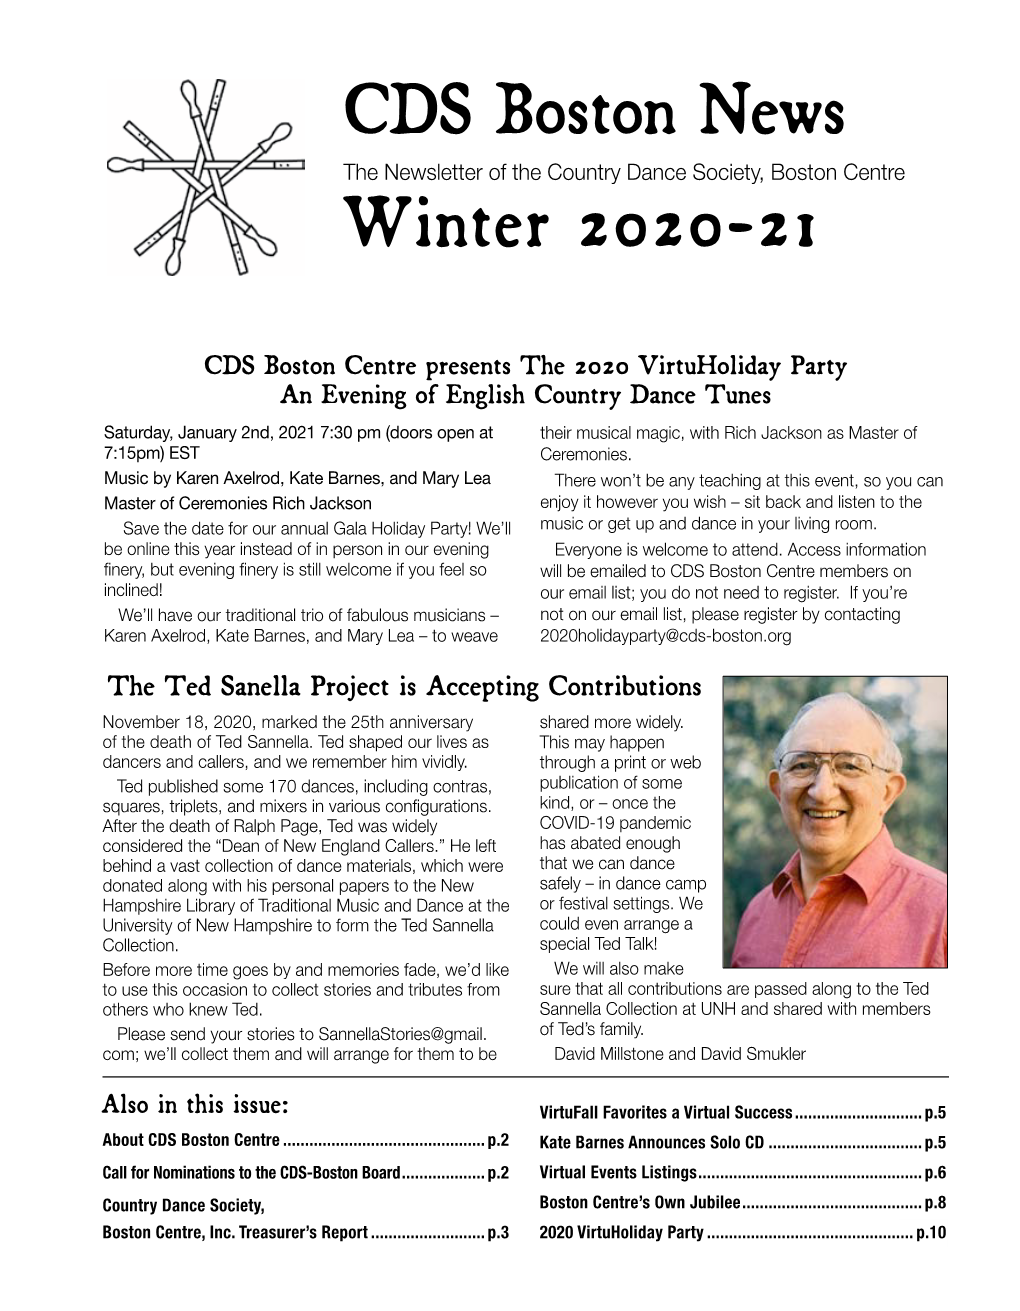 CDS Boston News Winter 2020-21